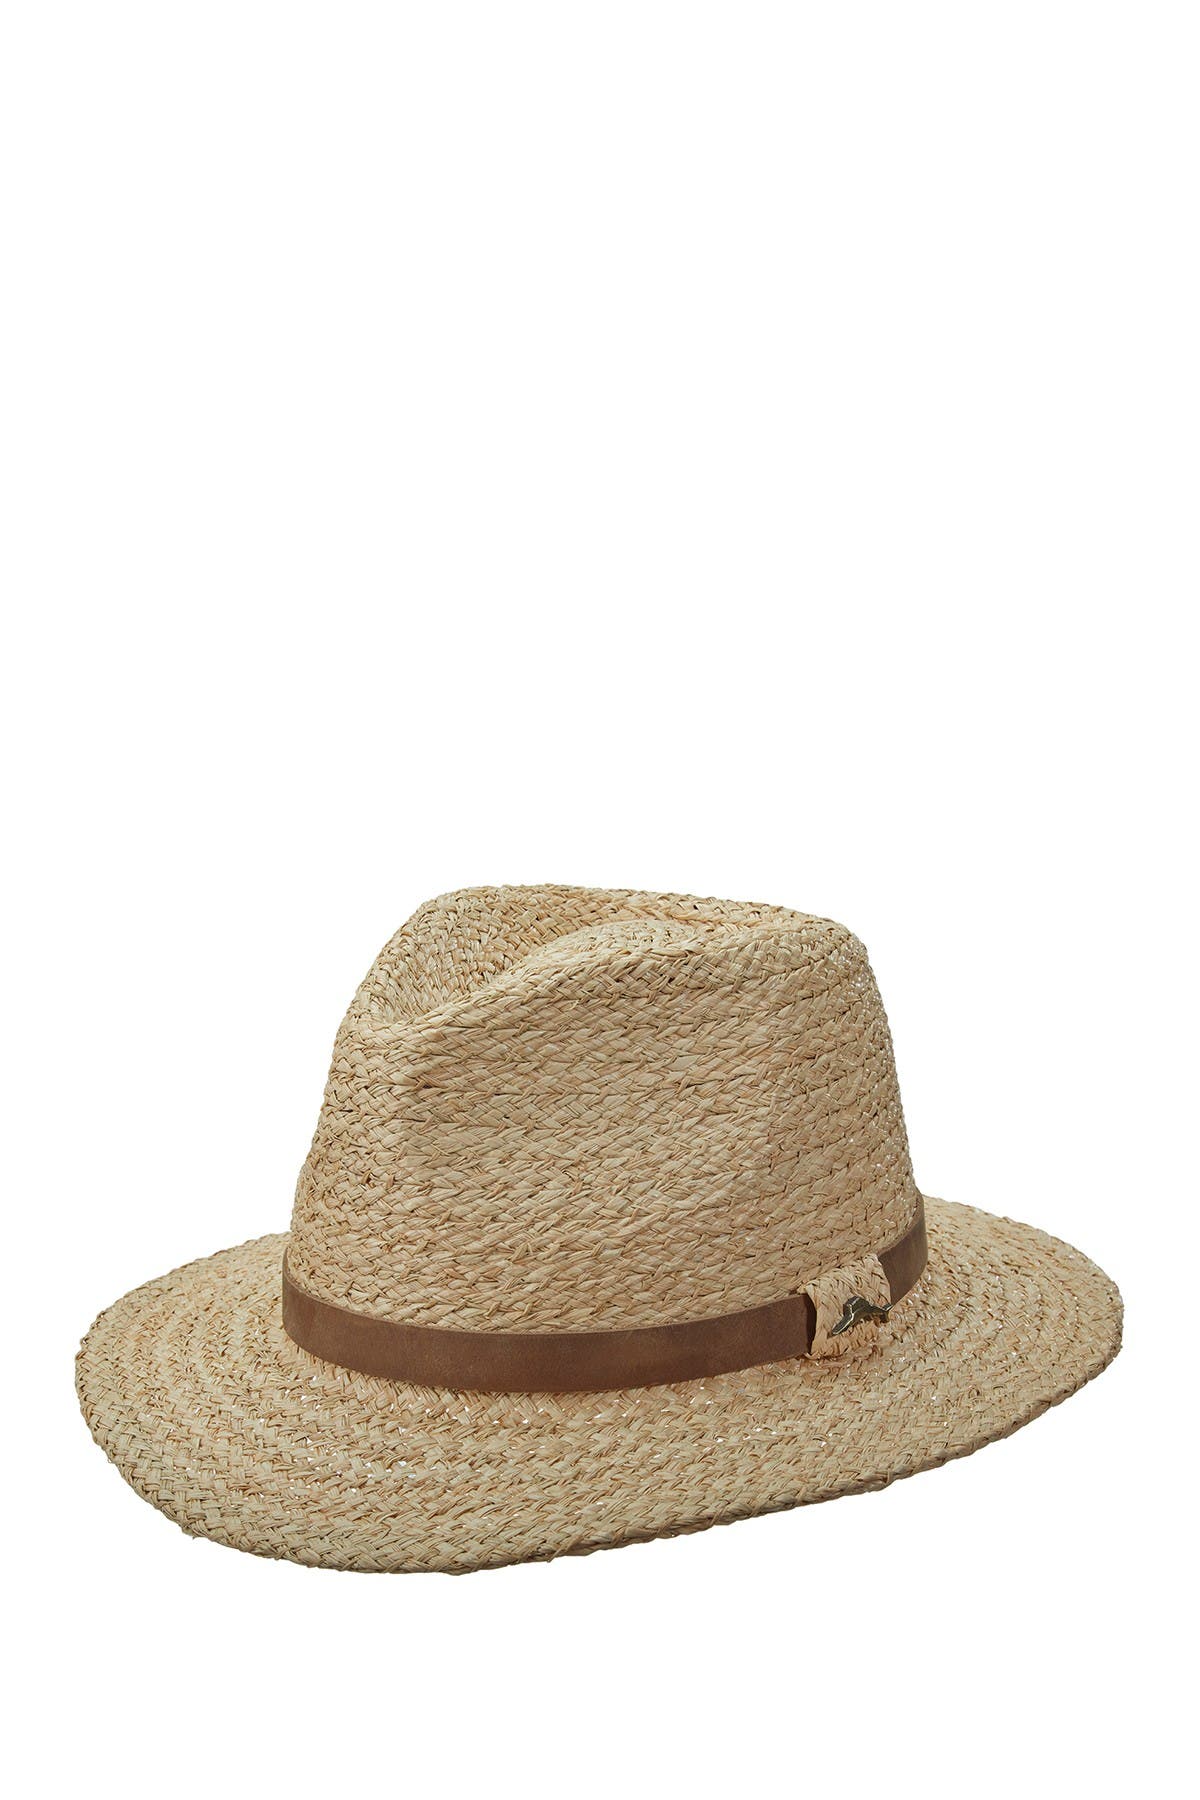 bahama hat